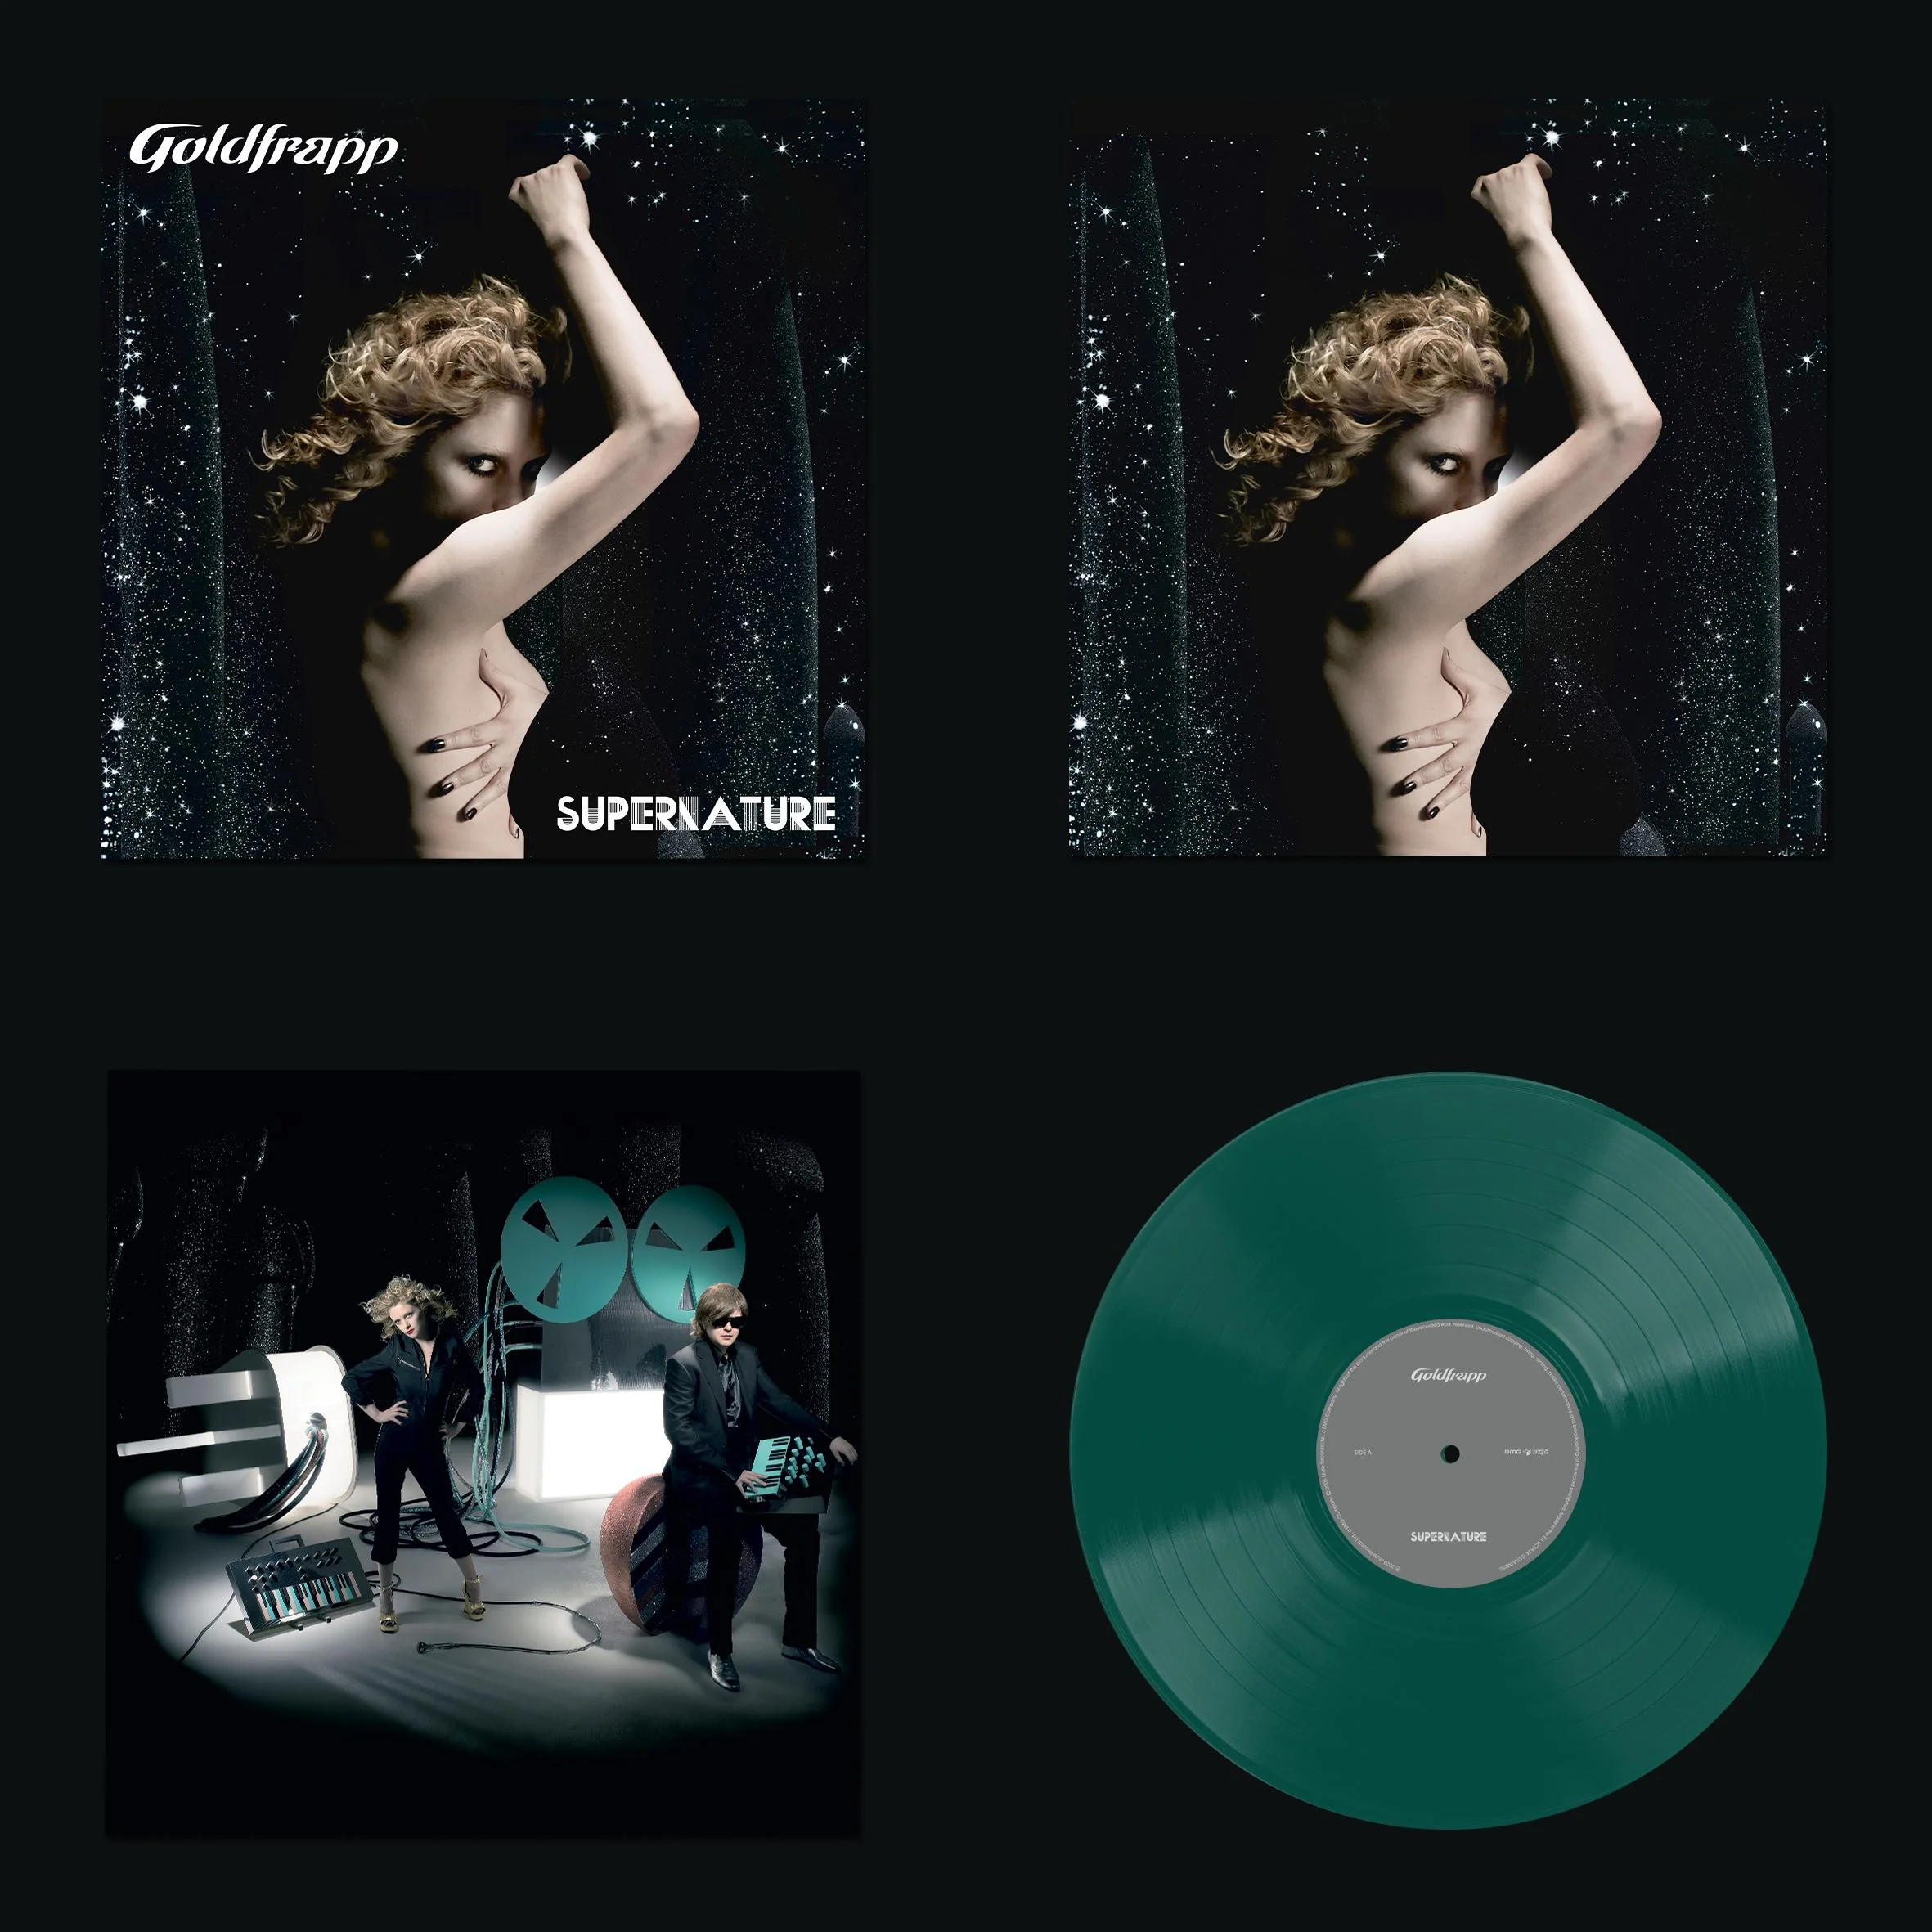 Goldfrapp "Supernature" Coloured LP